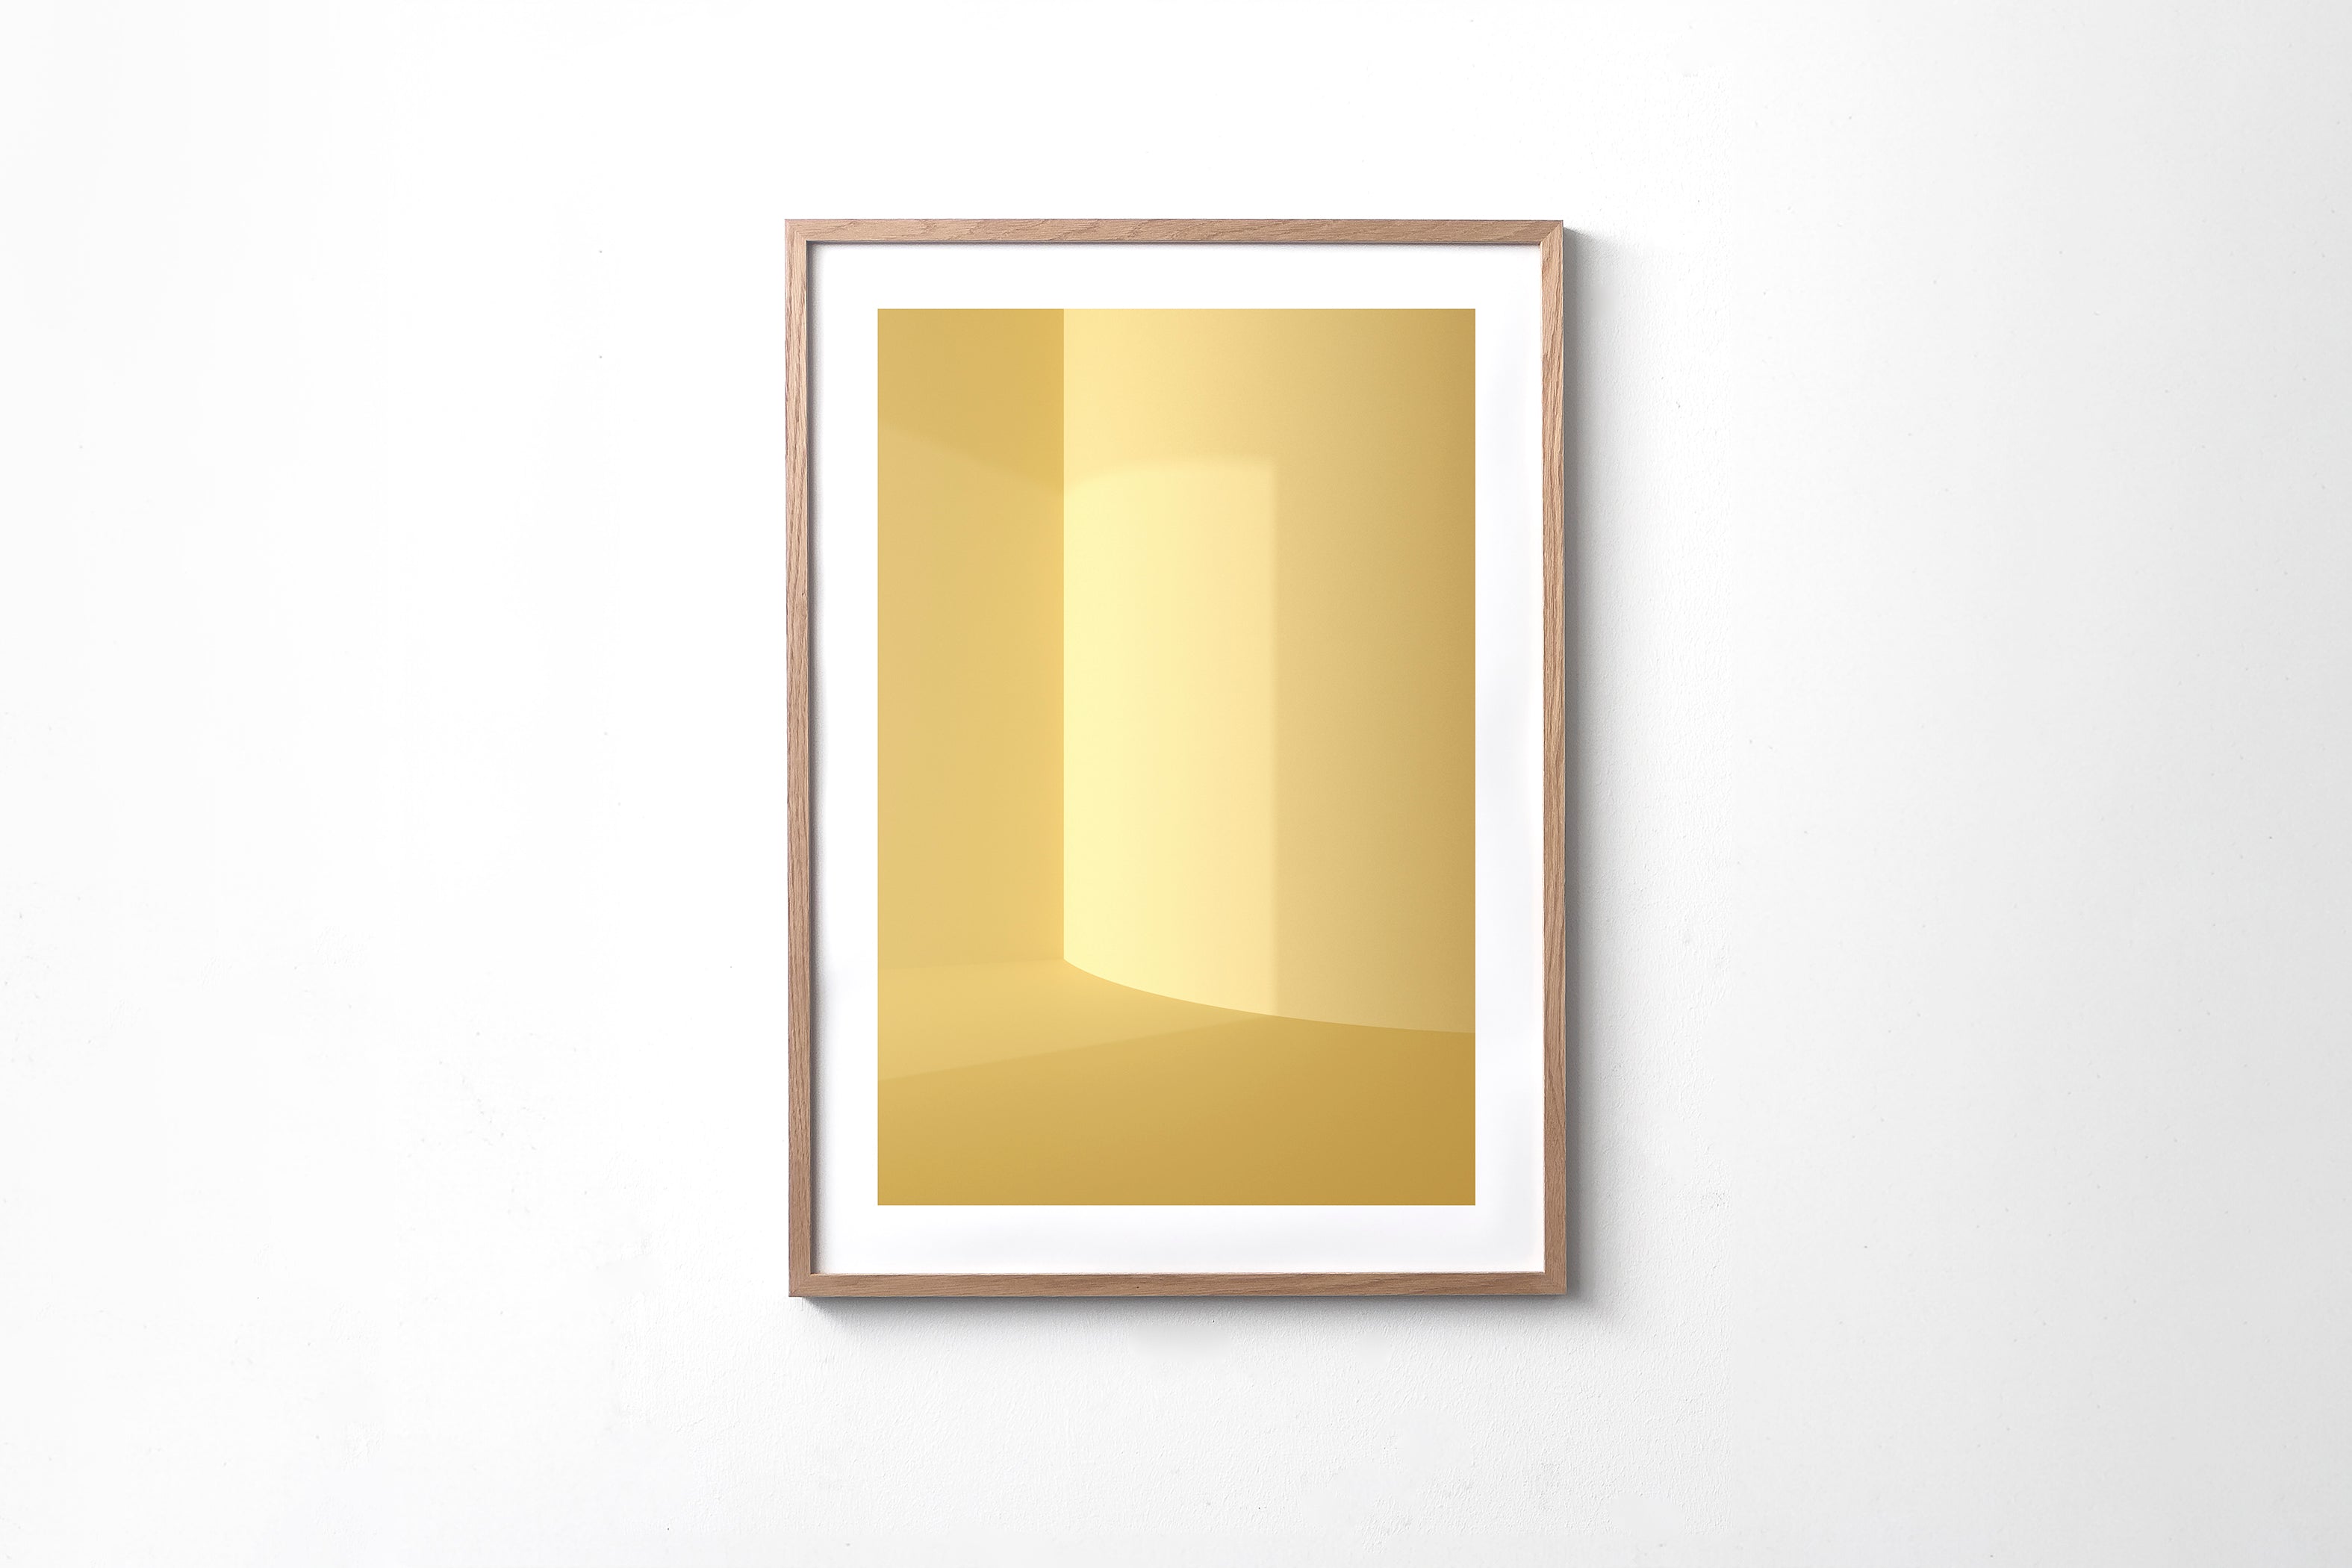 Kunstdruck im Bilderrahmen, Motiv gelb monochromer Raum, Titel Styr III, Baukunst Rene Kersting, Köln